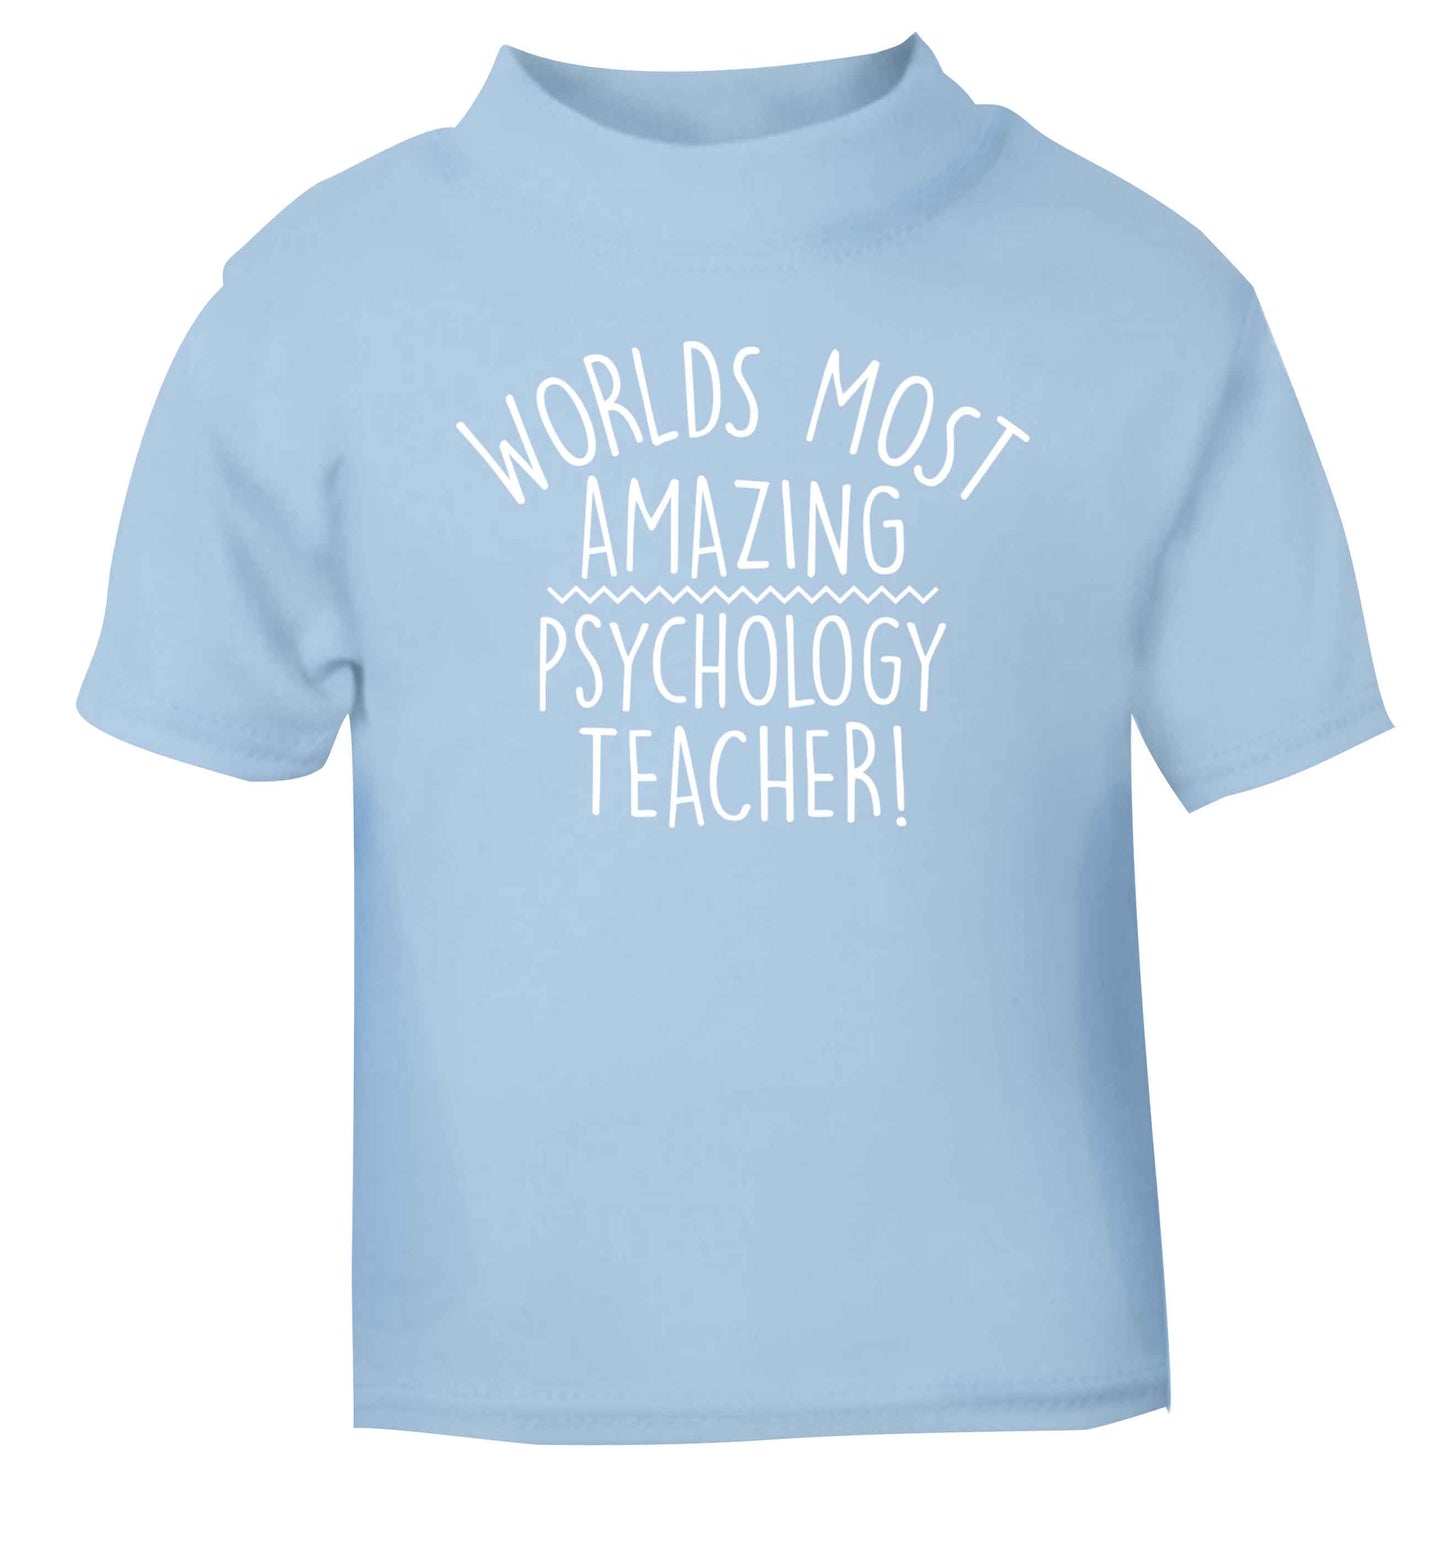 Worlds most amazing psychology teacher light blue baby toddler Tshirt 2 Years